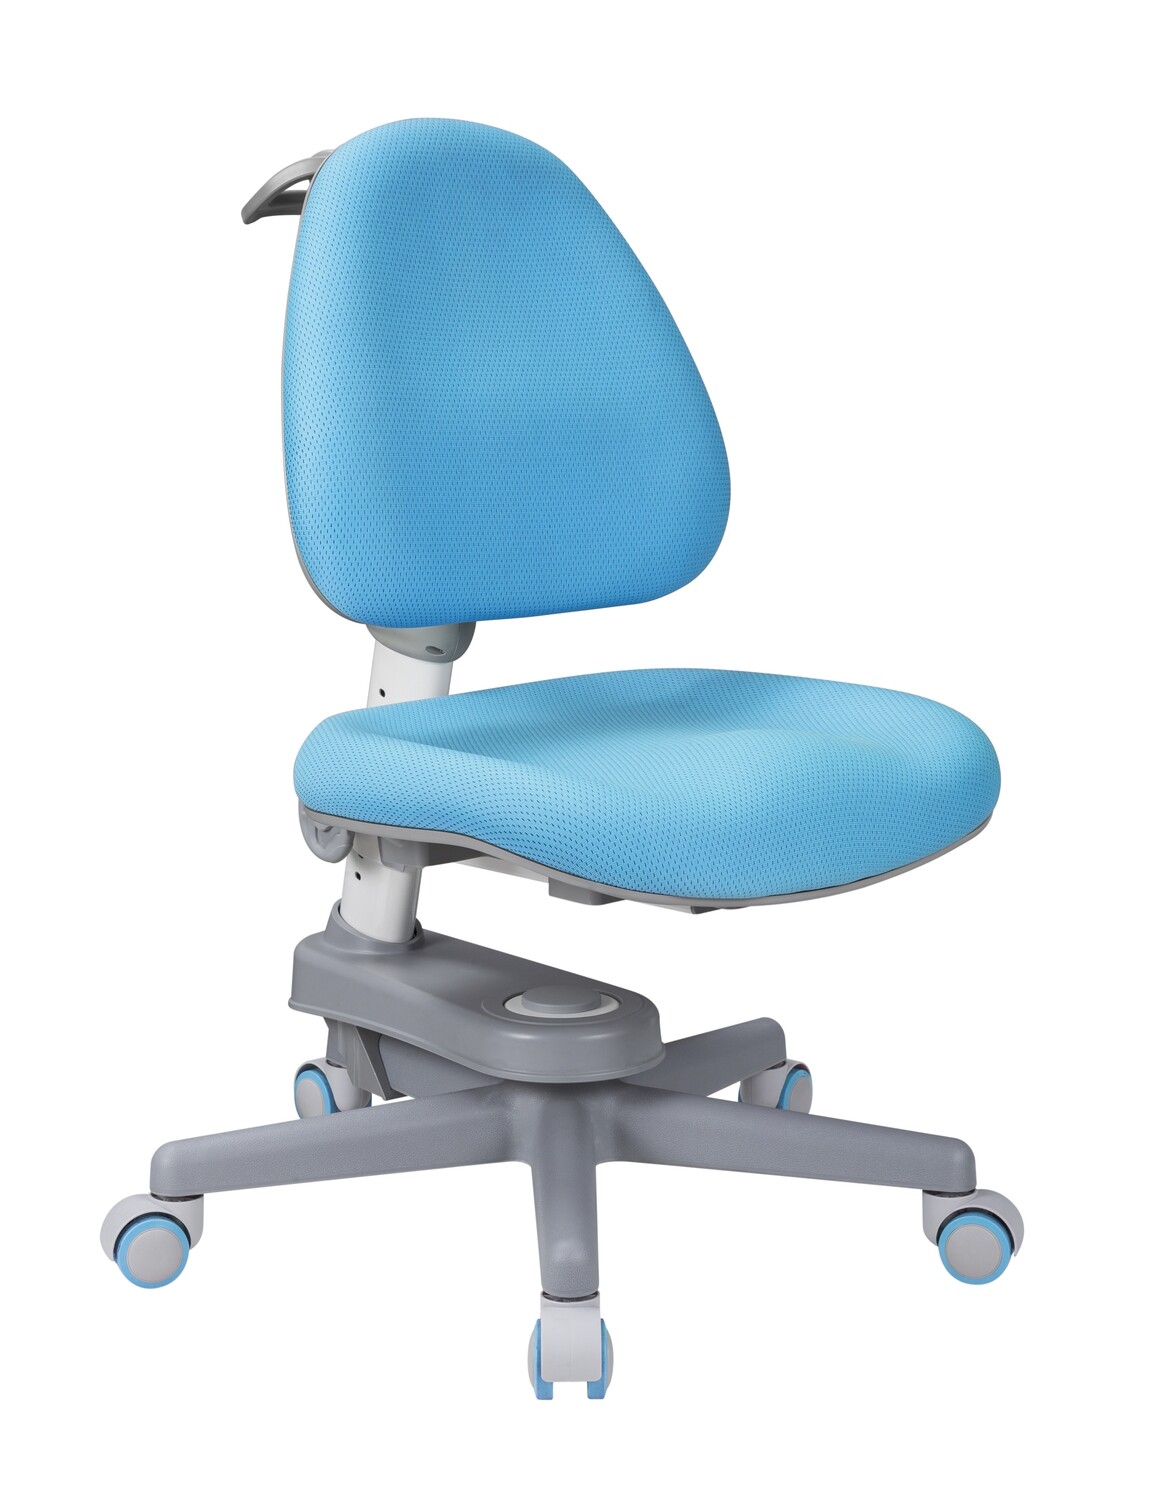 Kidomate Ergonomic Study Chair for Kids - Blue